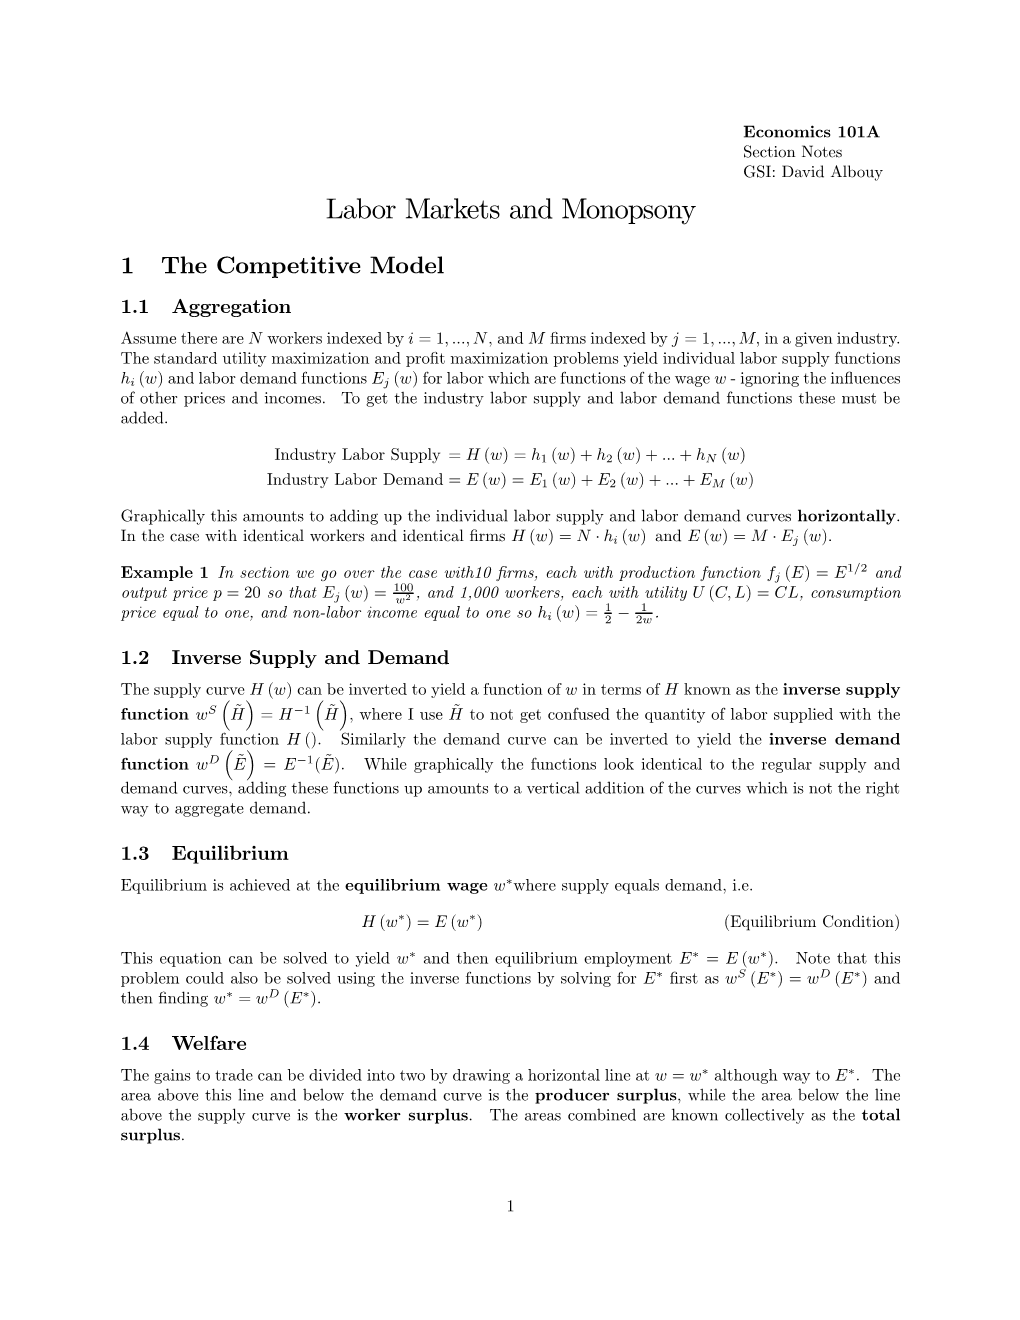 Labor Markets and Monopsony